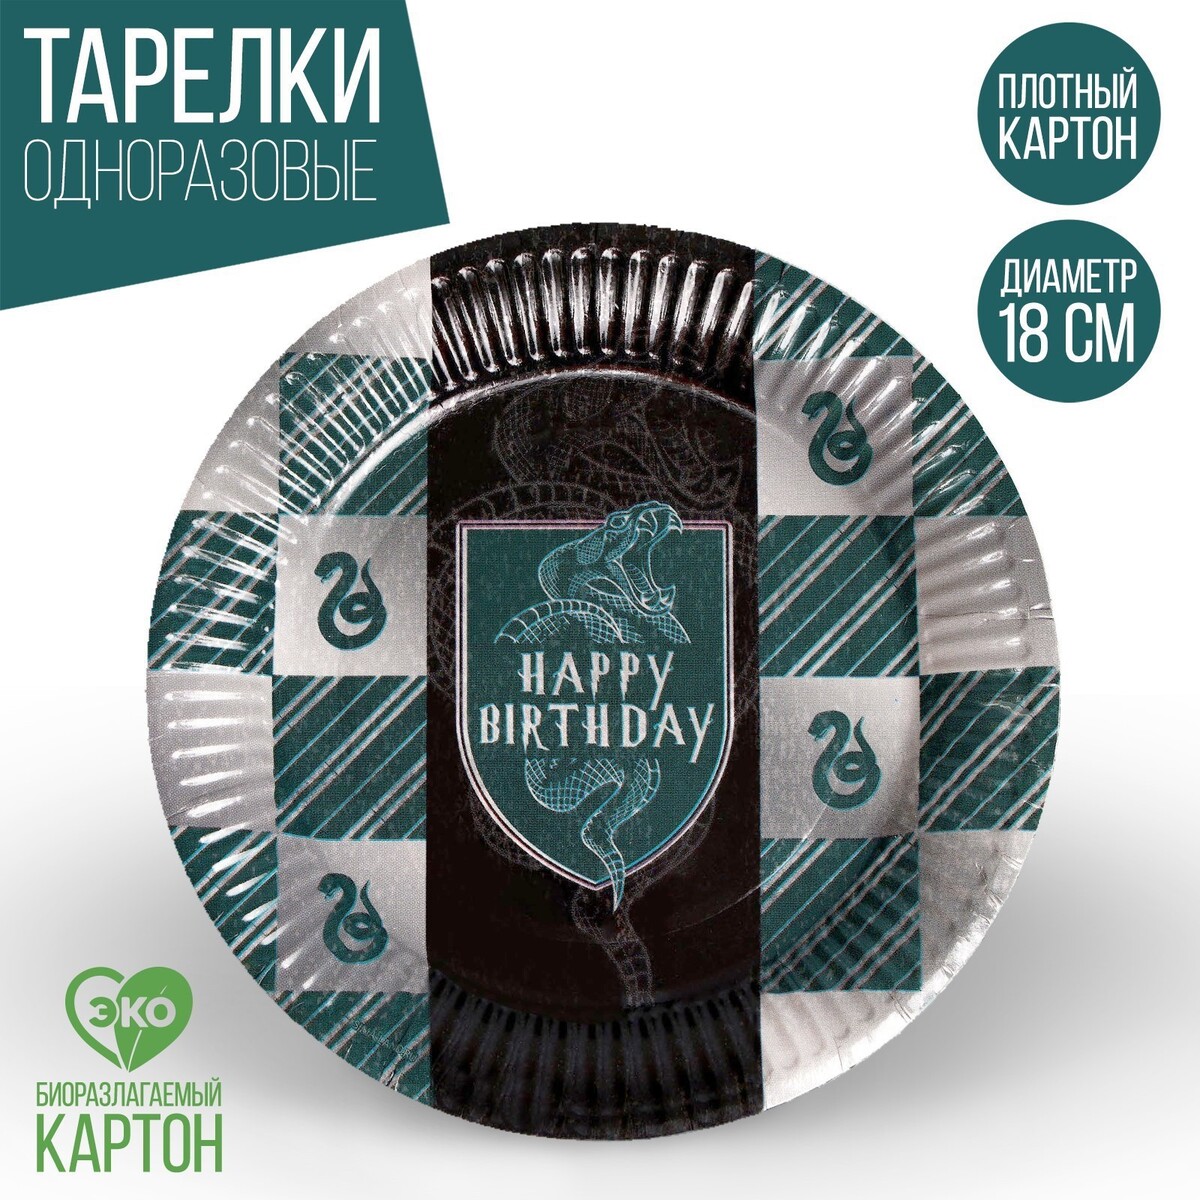 Тарелка одноразовая бумажная happy birthday, цвет зеленый, набор 6 шт, 18 см merimeri топпер для торта happy birthday